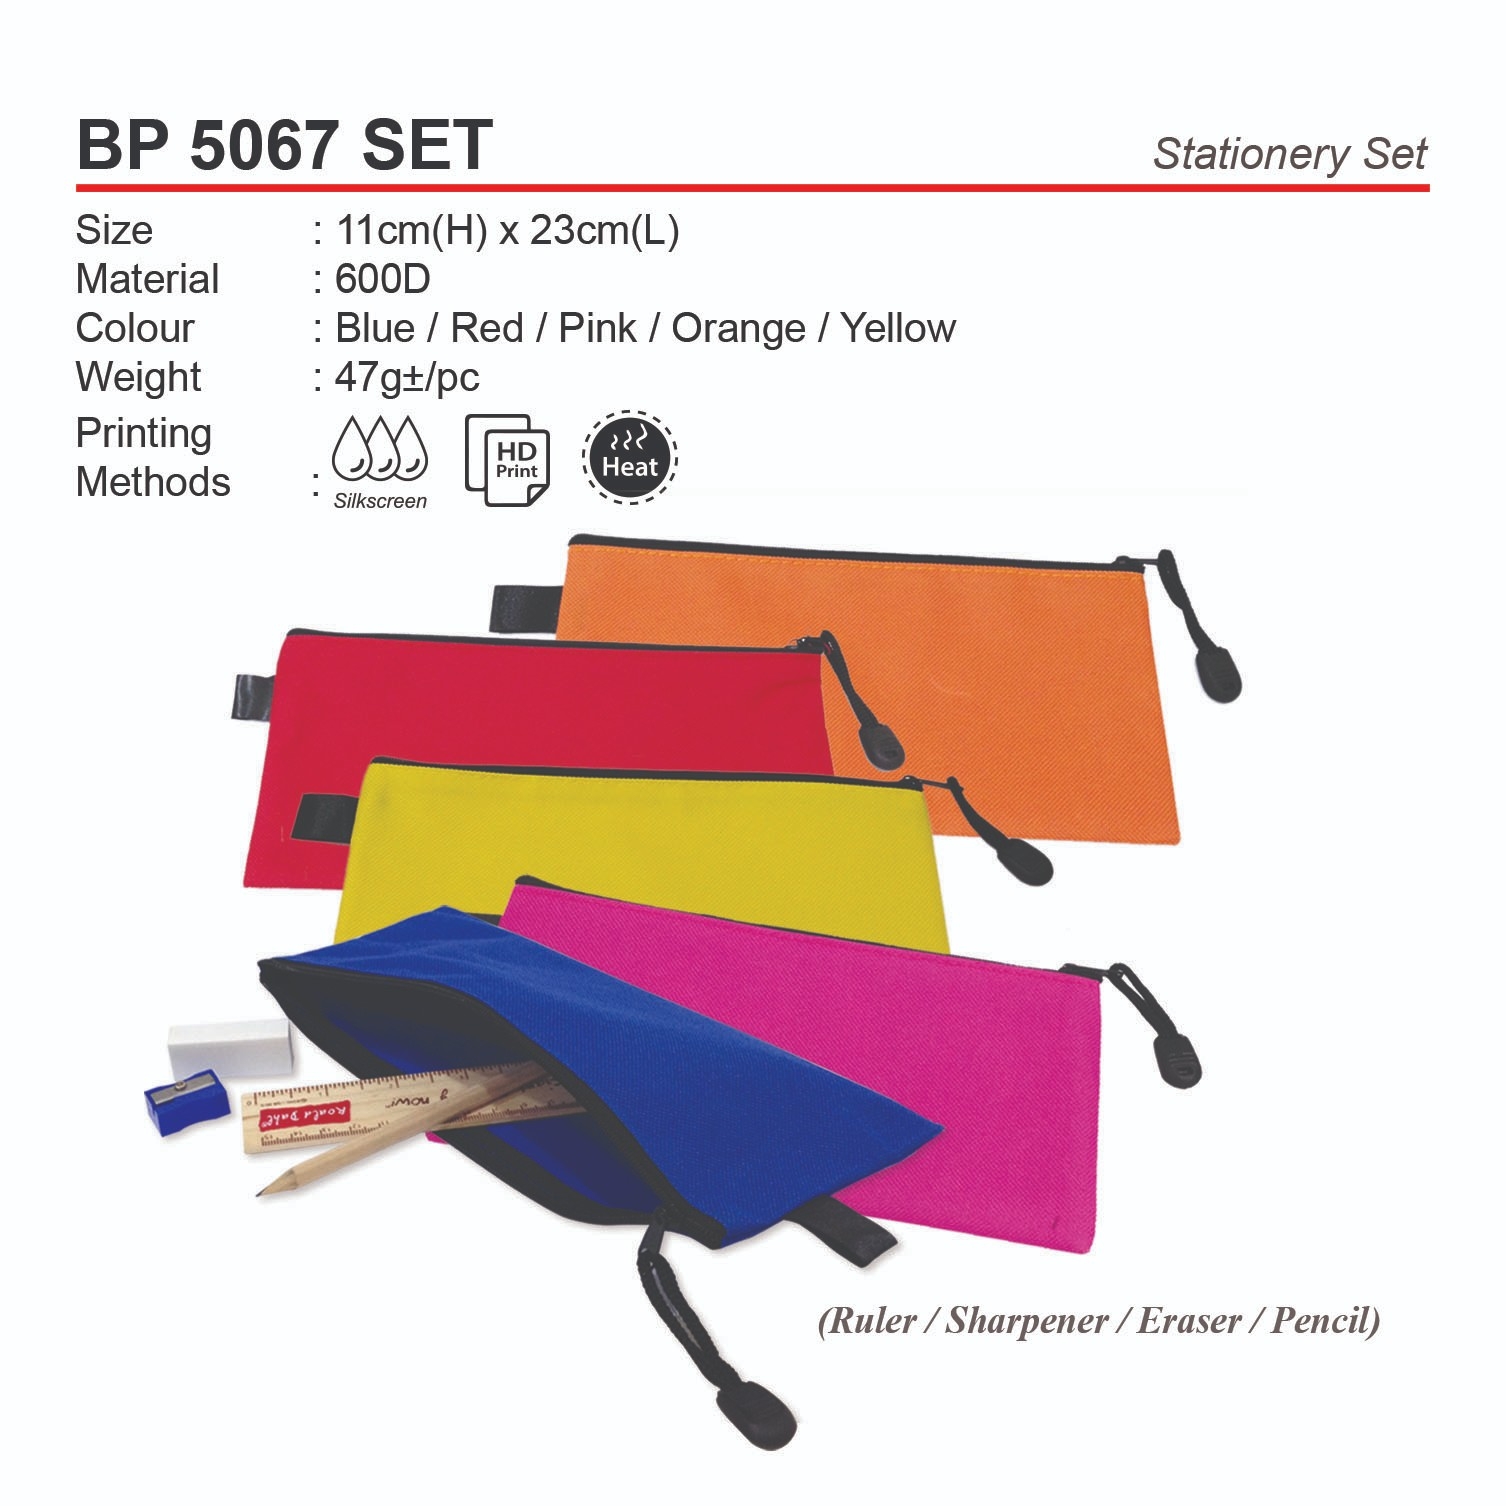 BP 5067 SET Stationery Set (A)